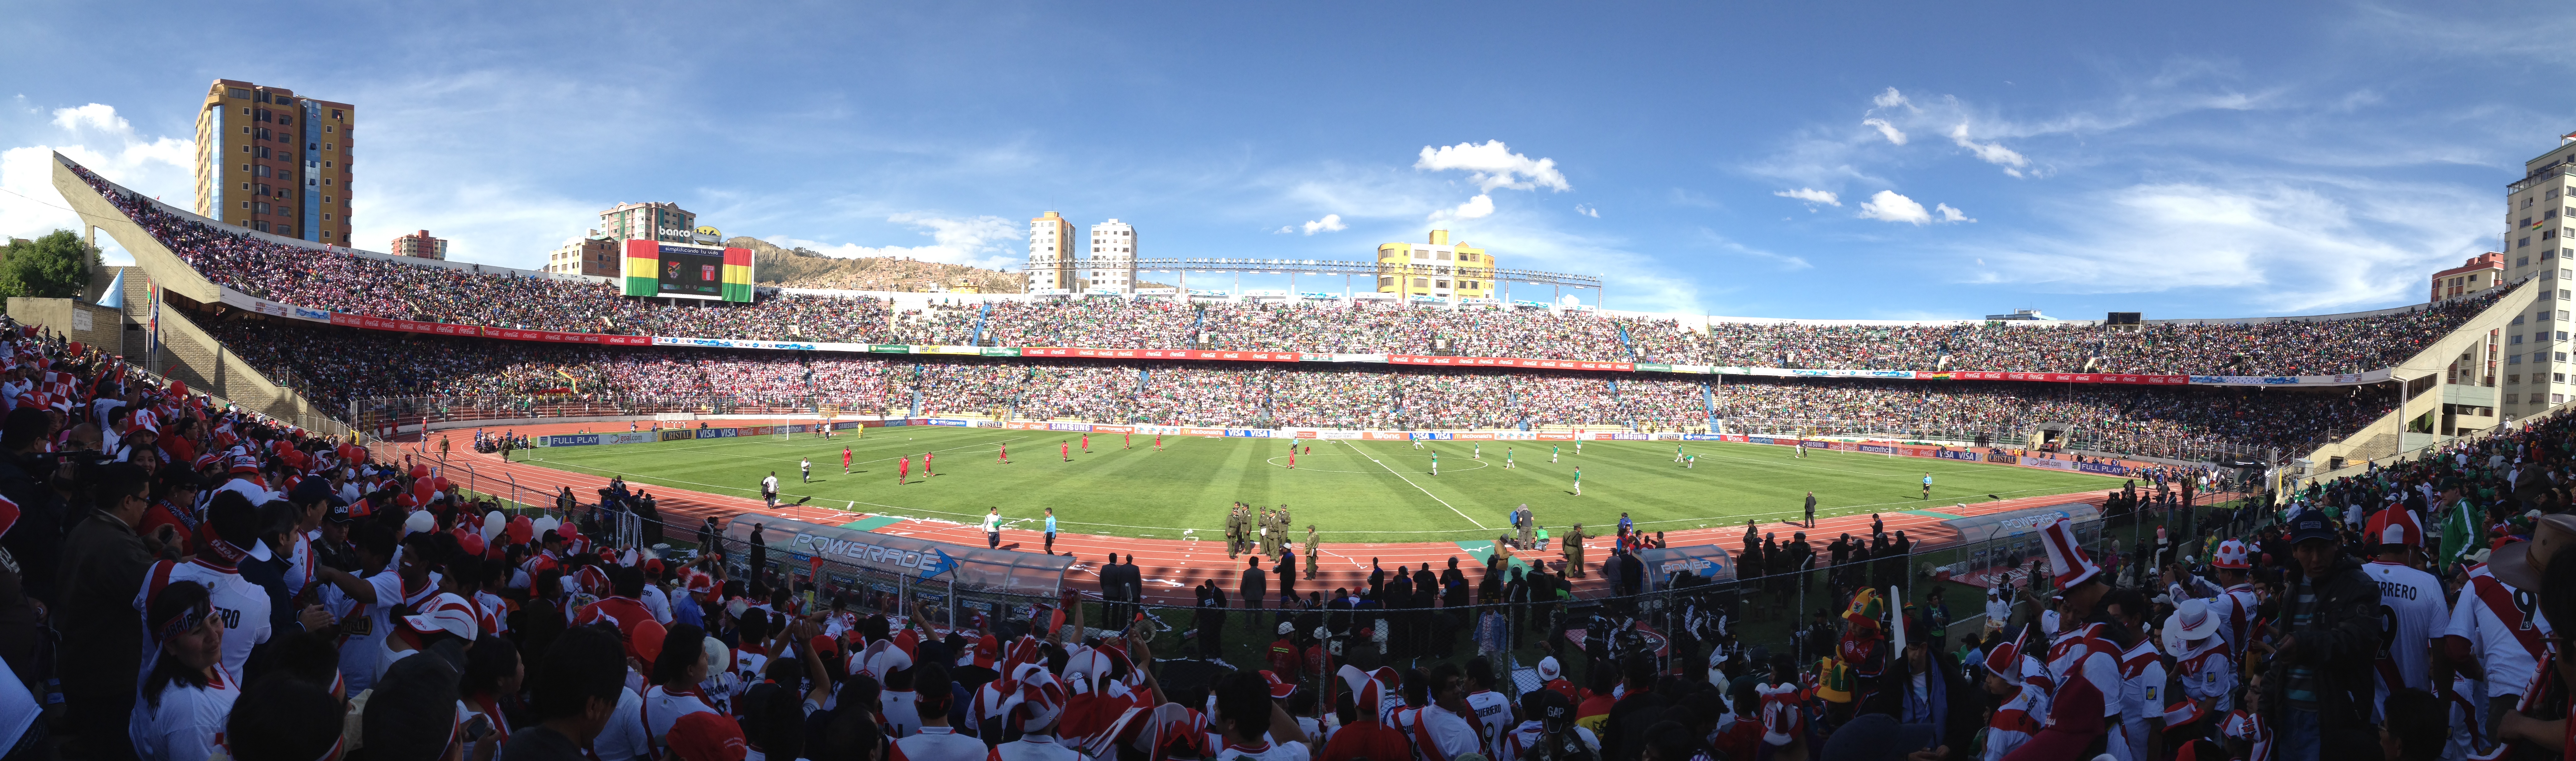 Bolivia vs. Peru at the Hernando Siles Stadium in La Paz - Photo by Eddie Avila.